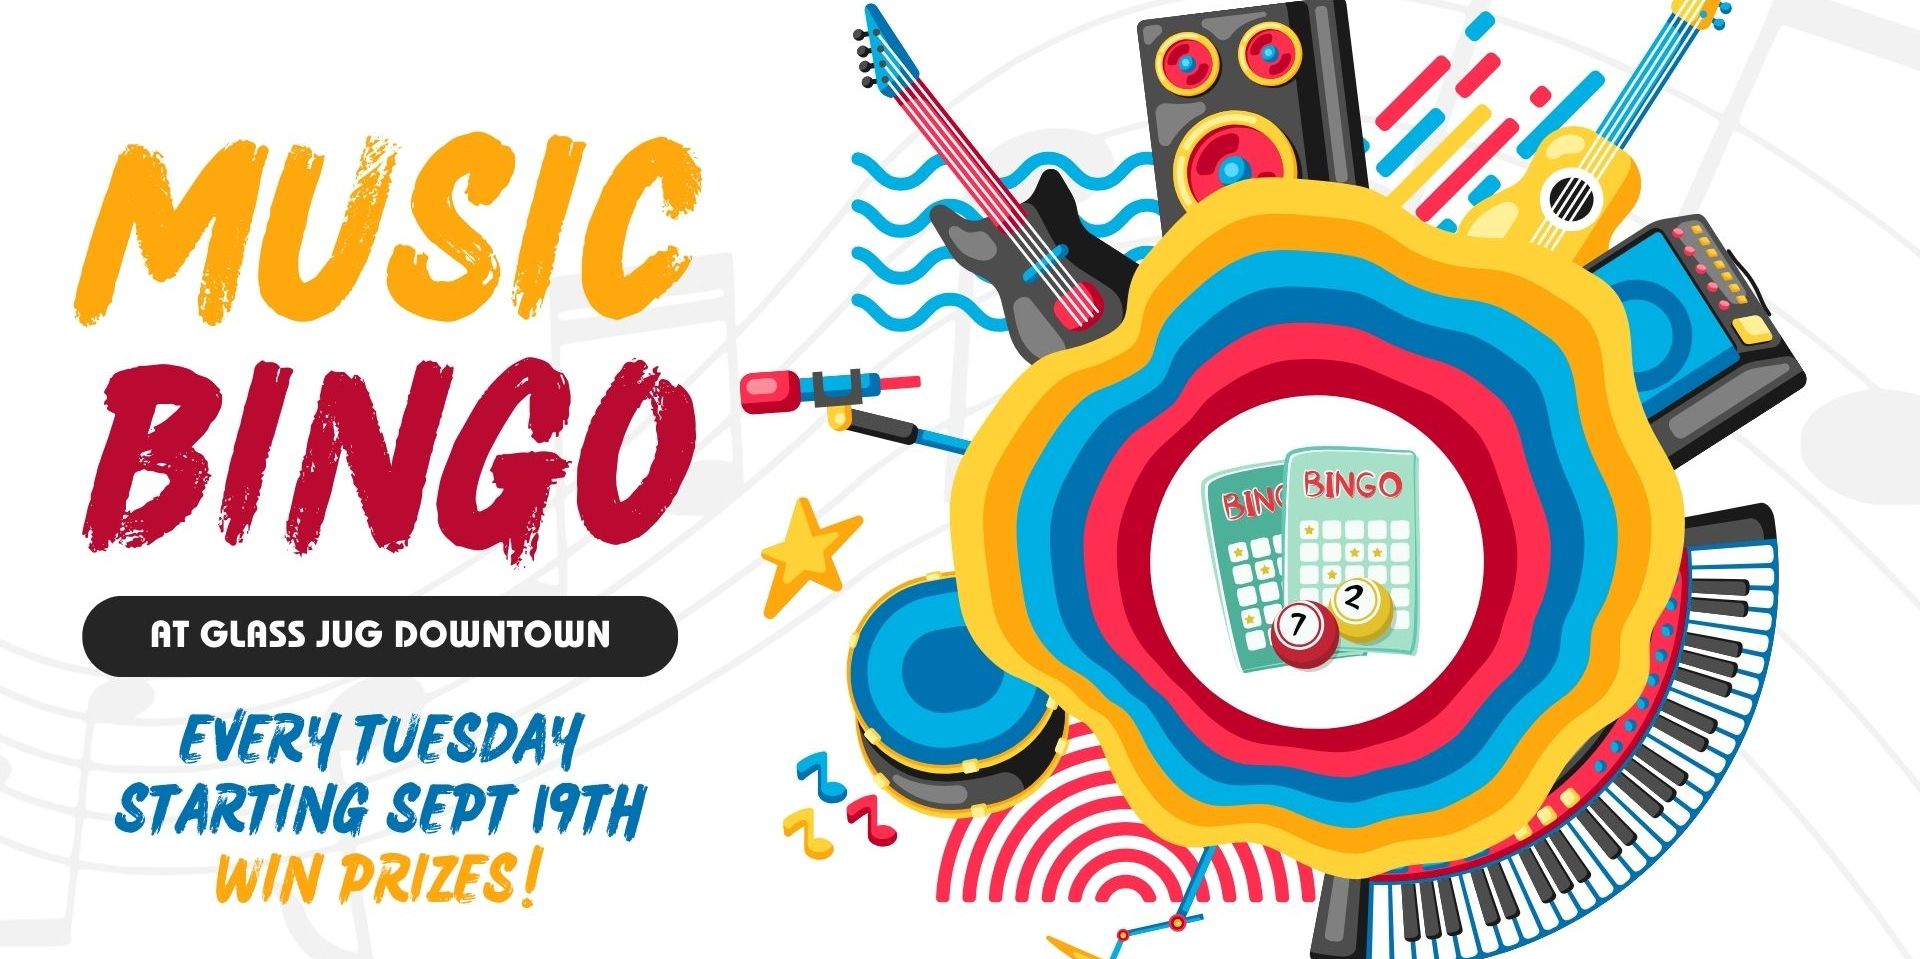 Music Bingo promotional image